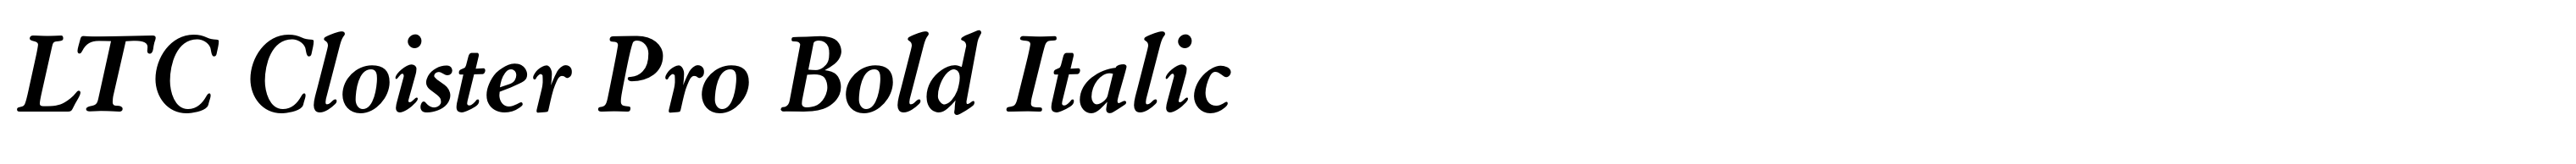 LTC Cloister Pro Bold Italic